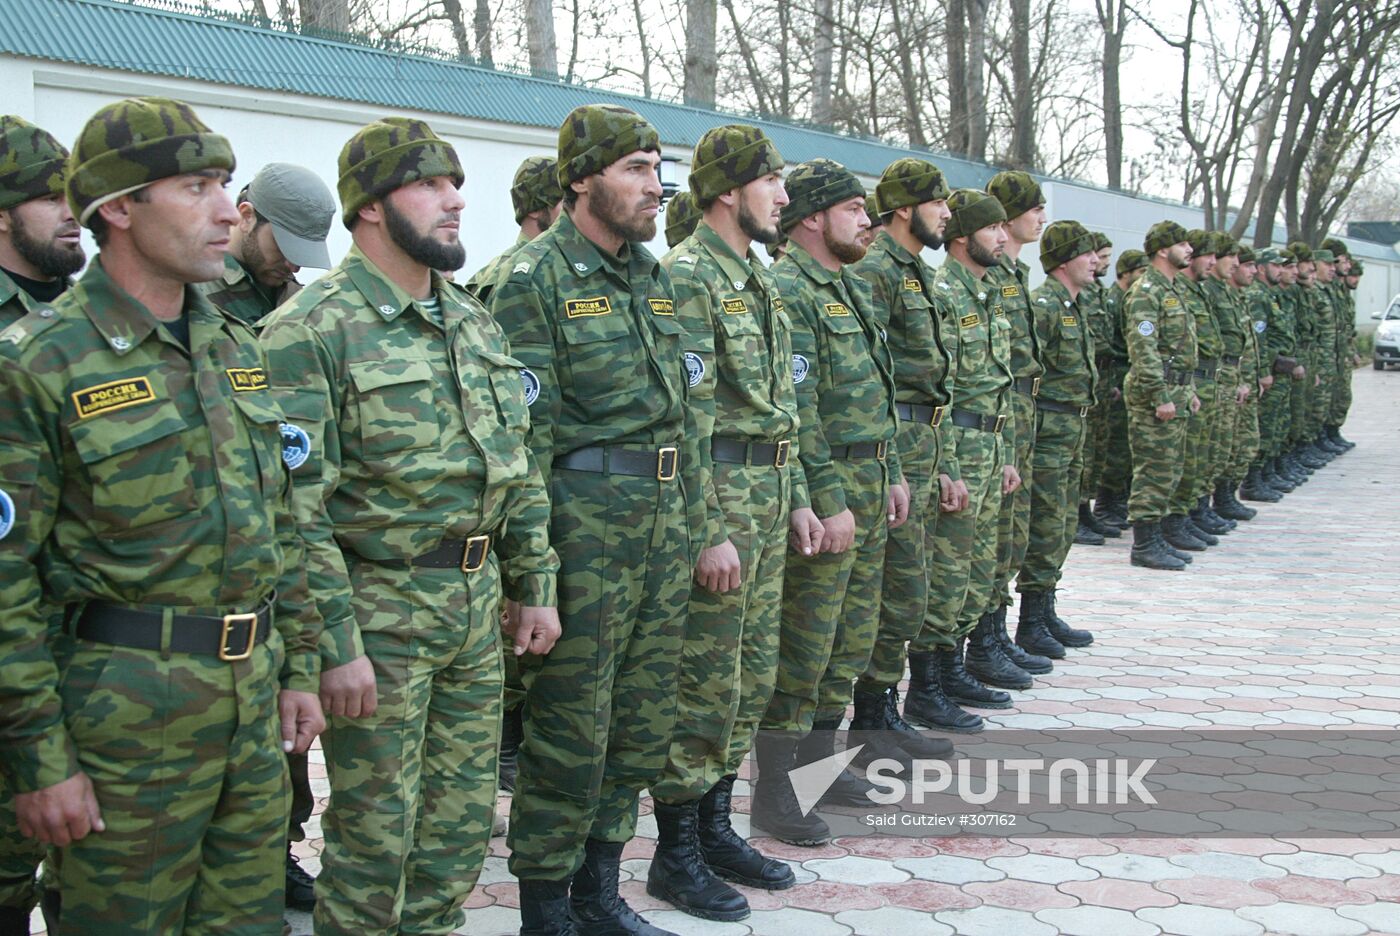 Vostok battalion of the Russian Defense Ministry